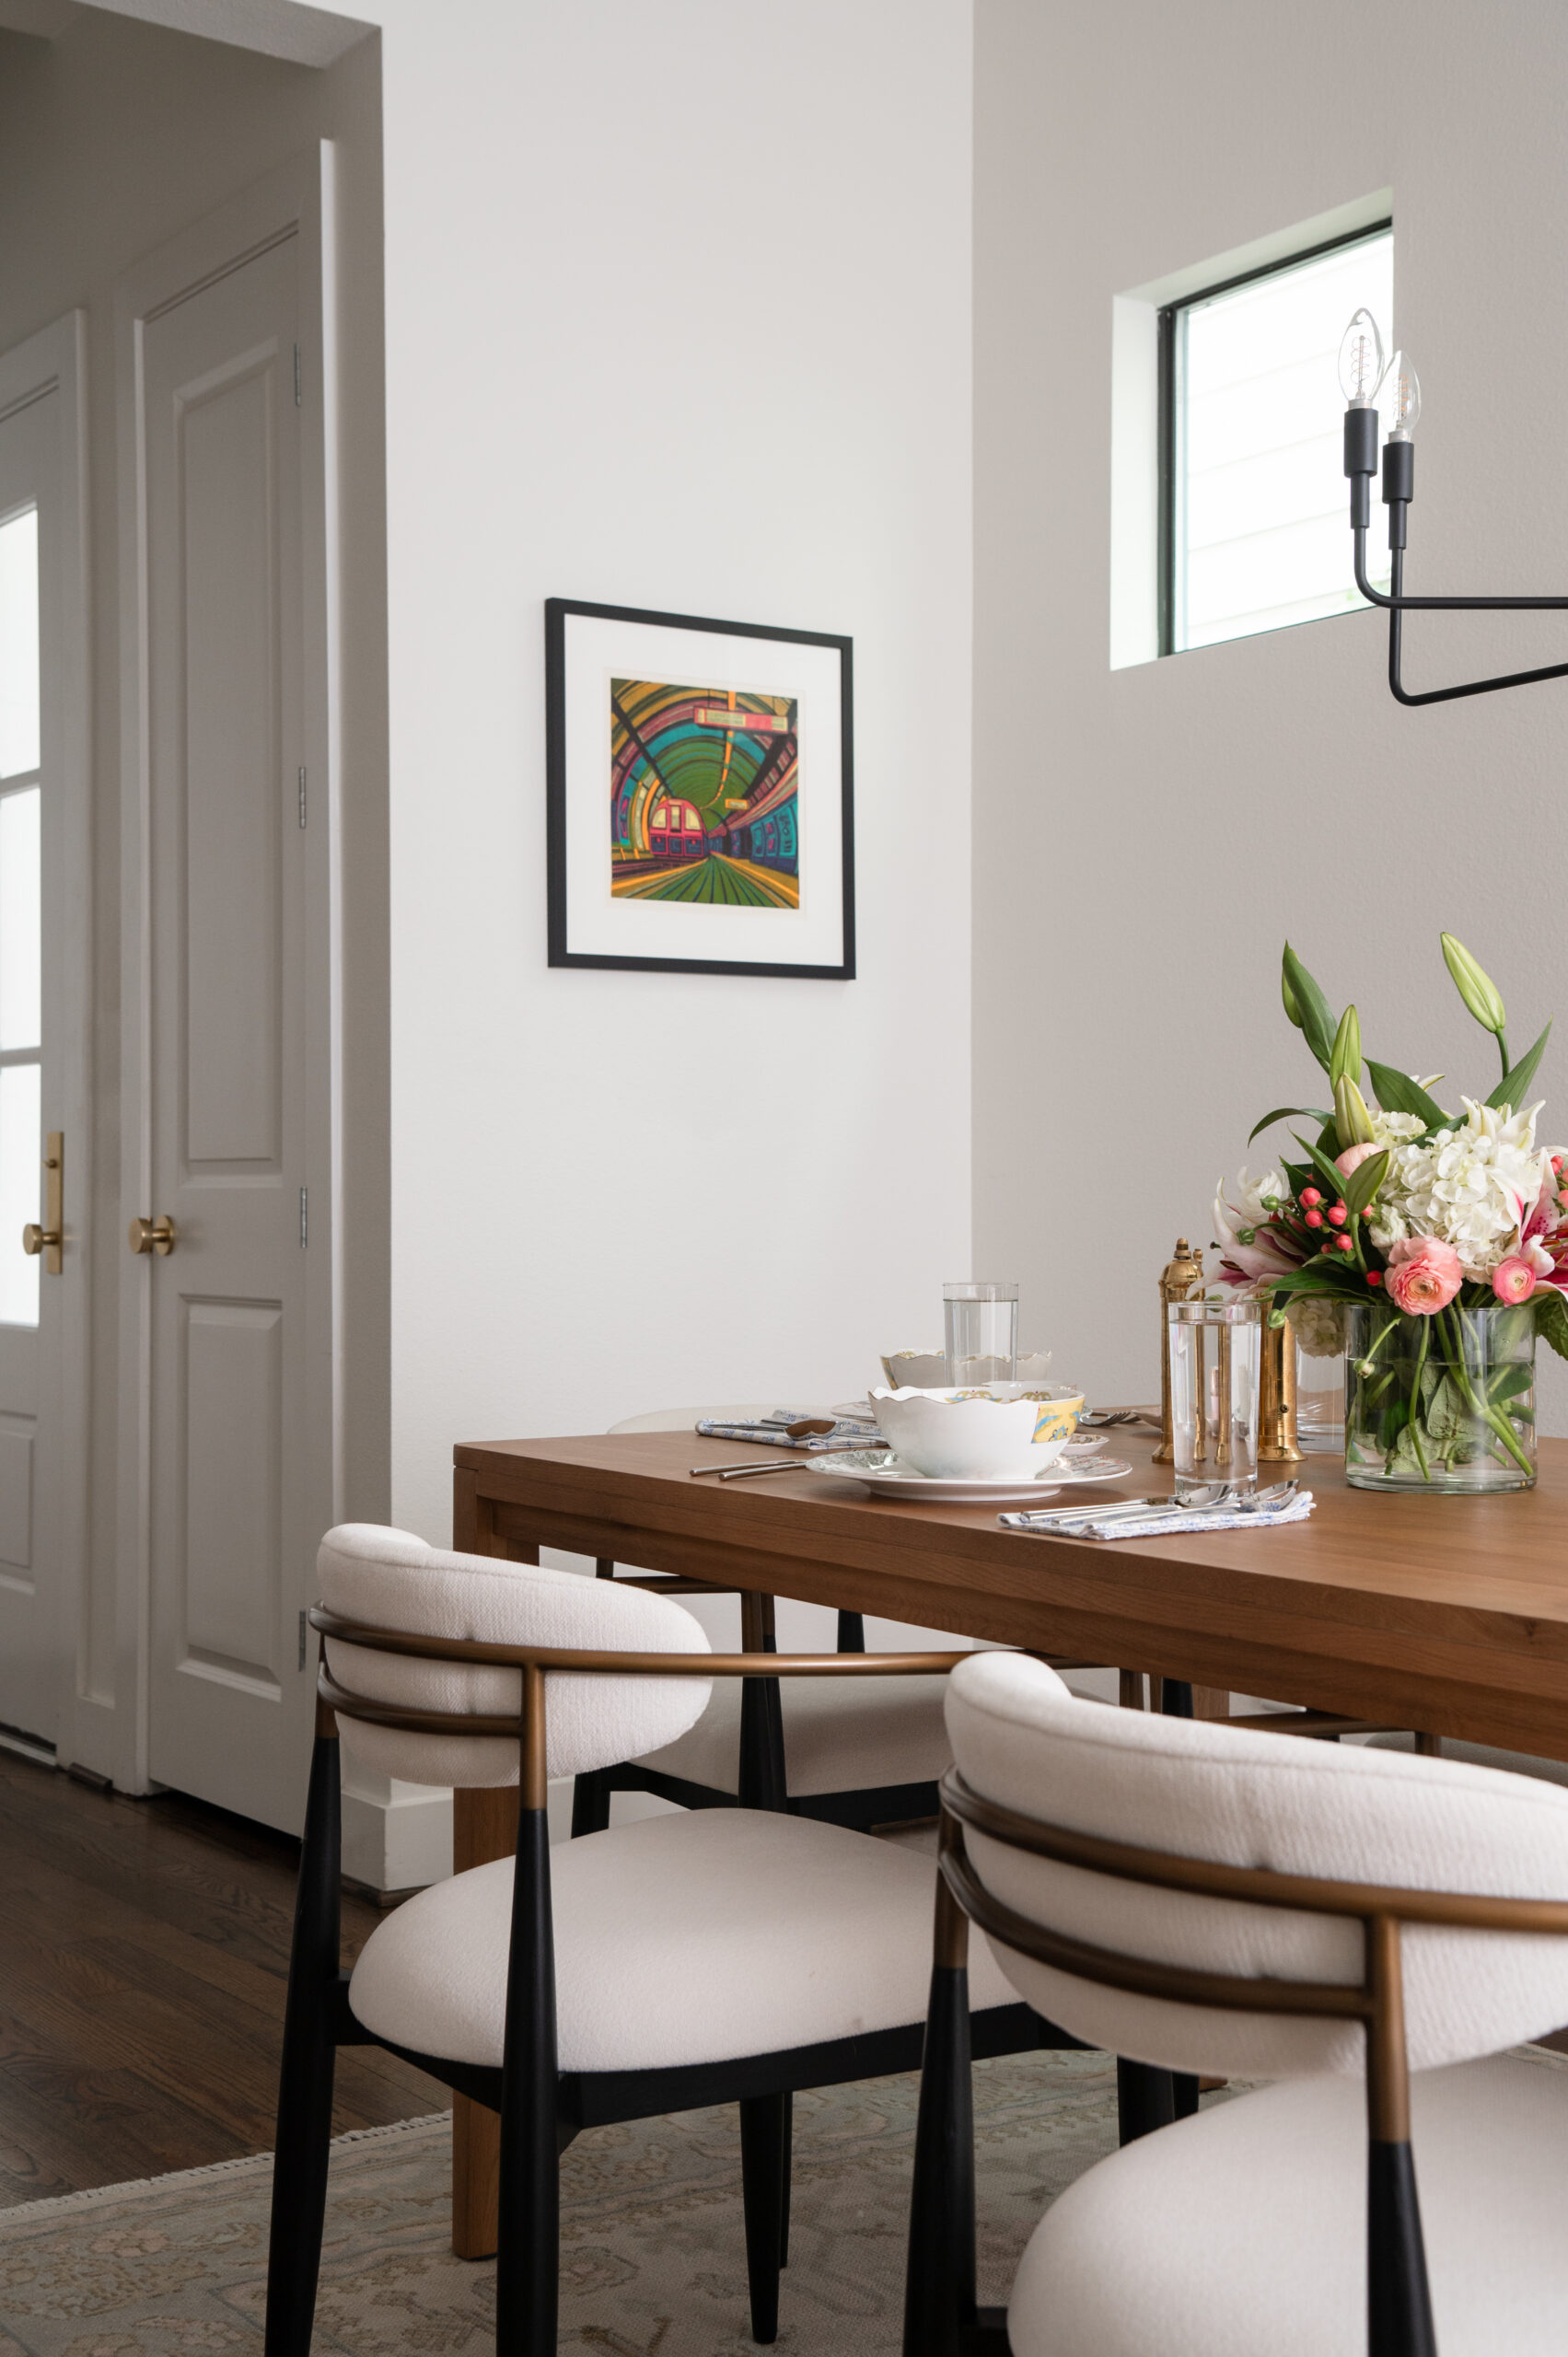 Classy interior design decor and furniture in dining room